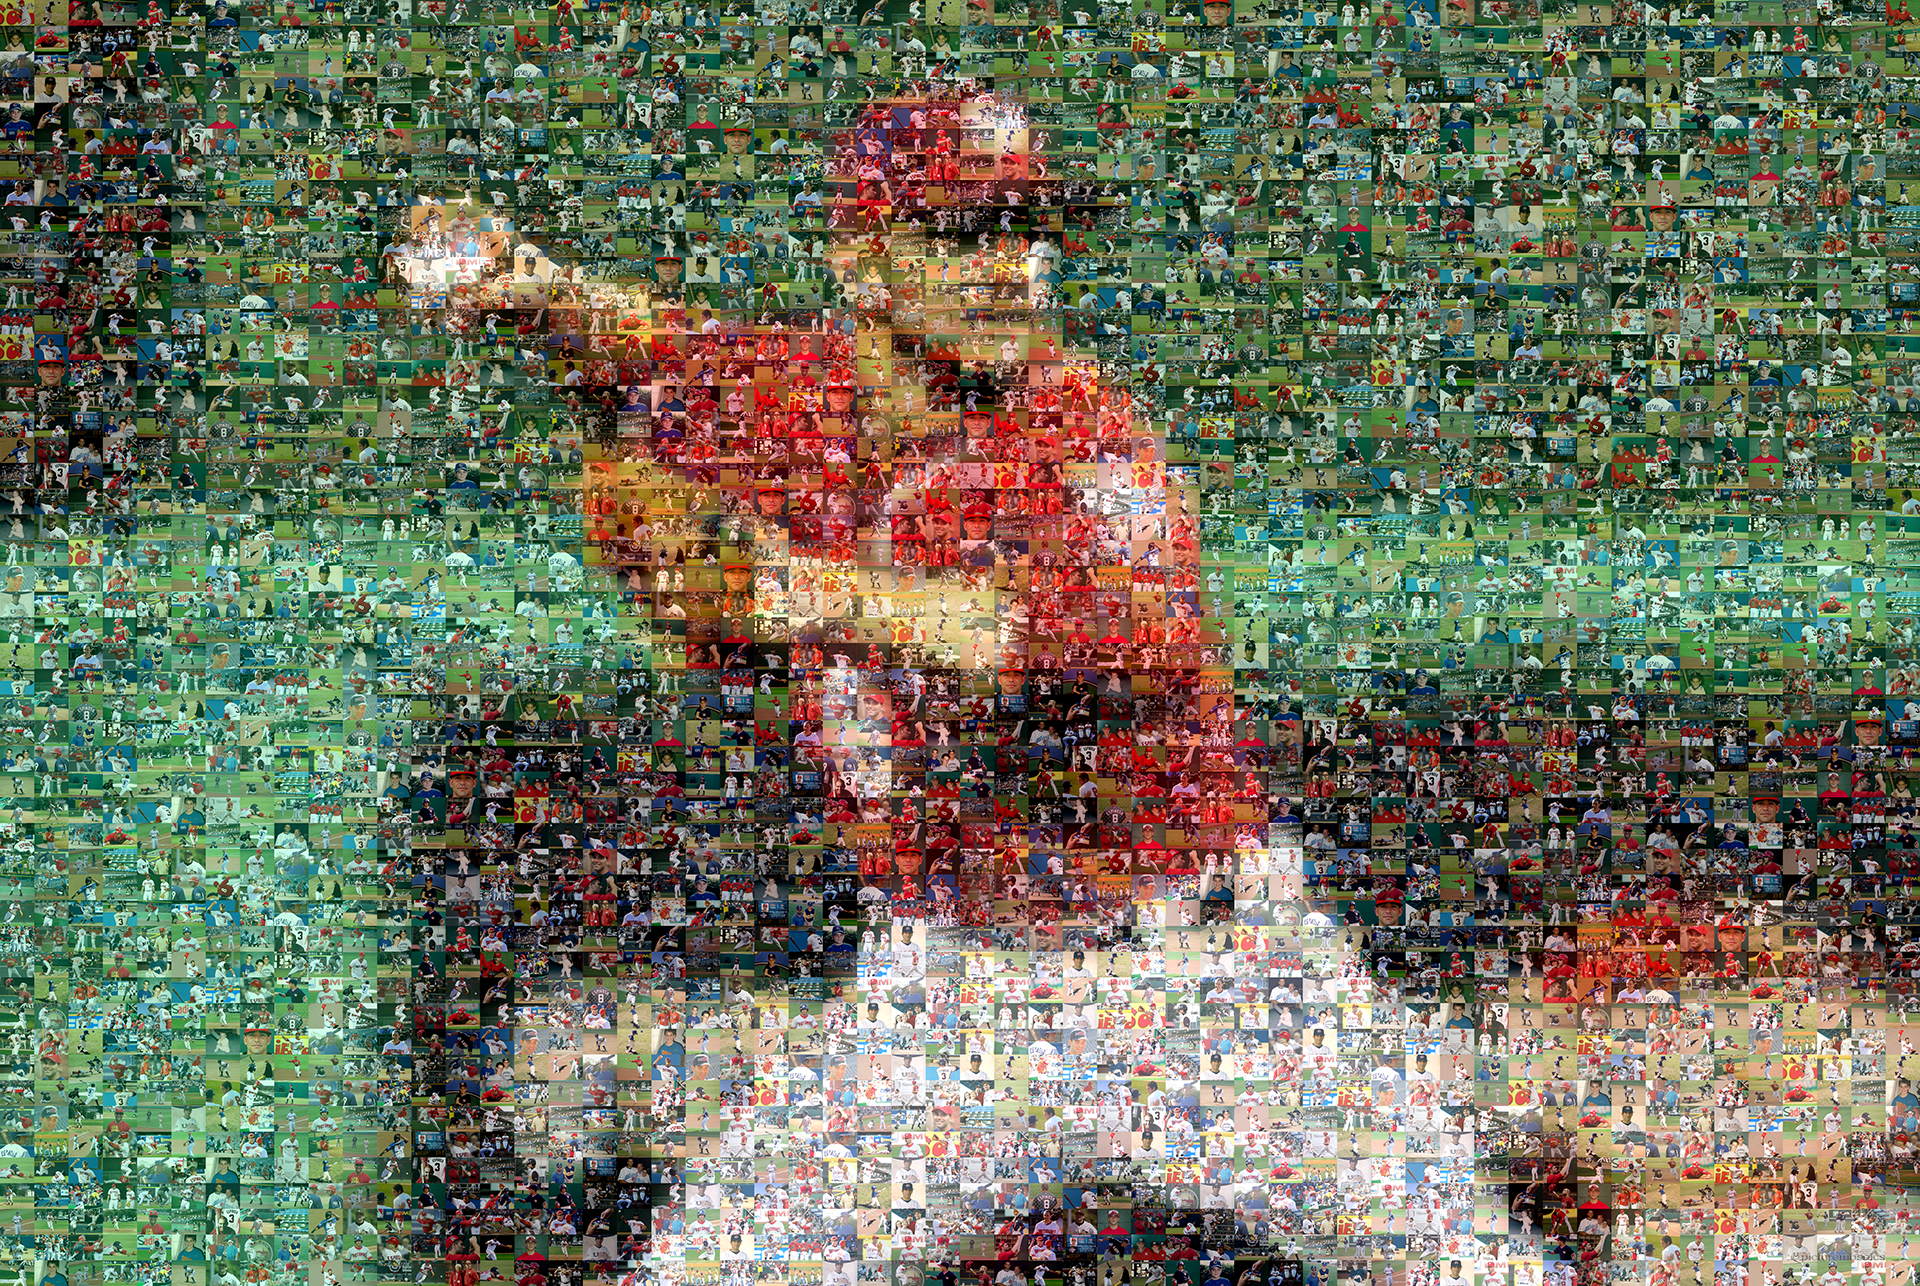 photo mosaic created using 161 baseball photos